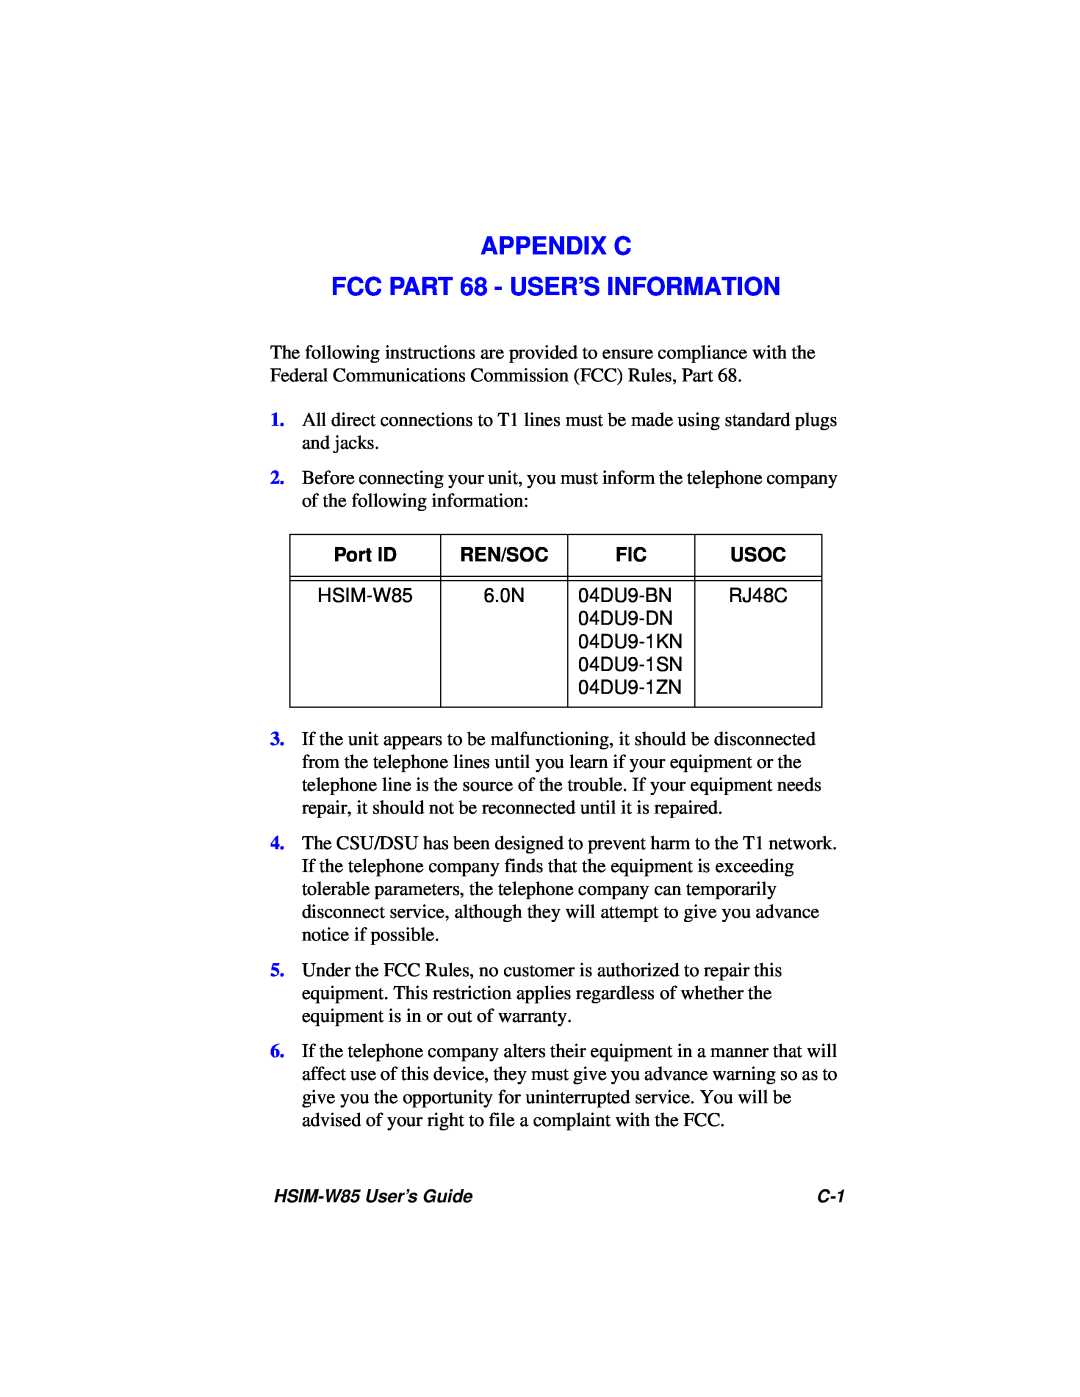 Cabletron Systems W85 manual APPENDIX C FCC PART 68 - USER’S INFORMATION, Port ID, Ren/Soc, Usoc 